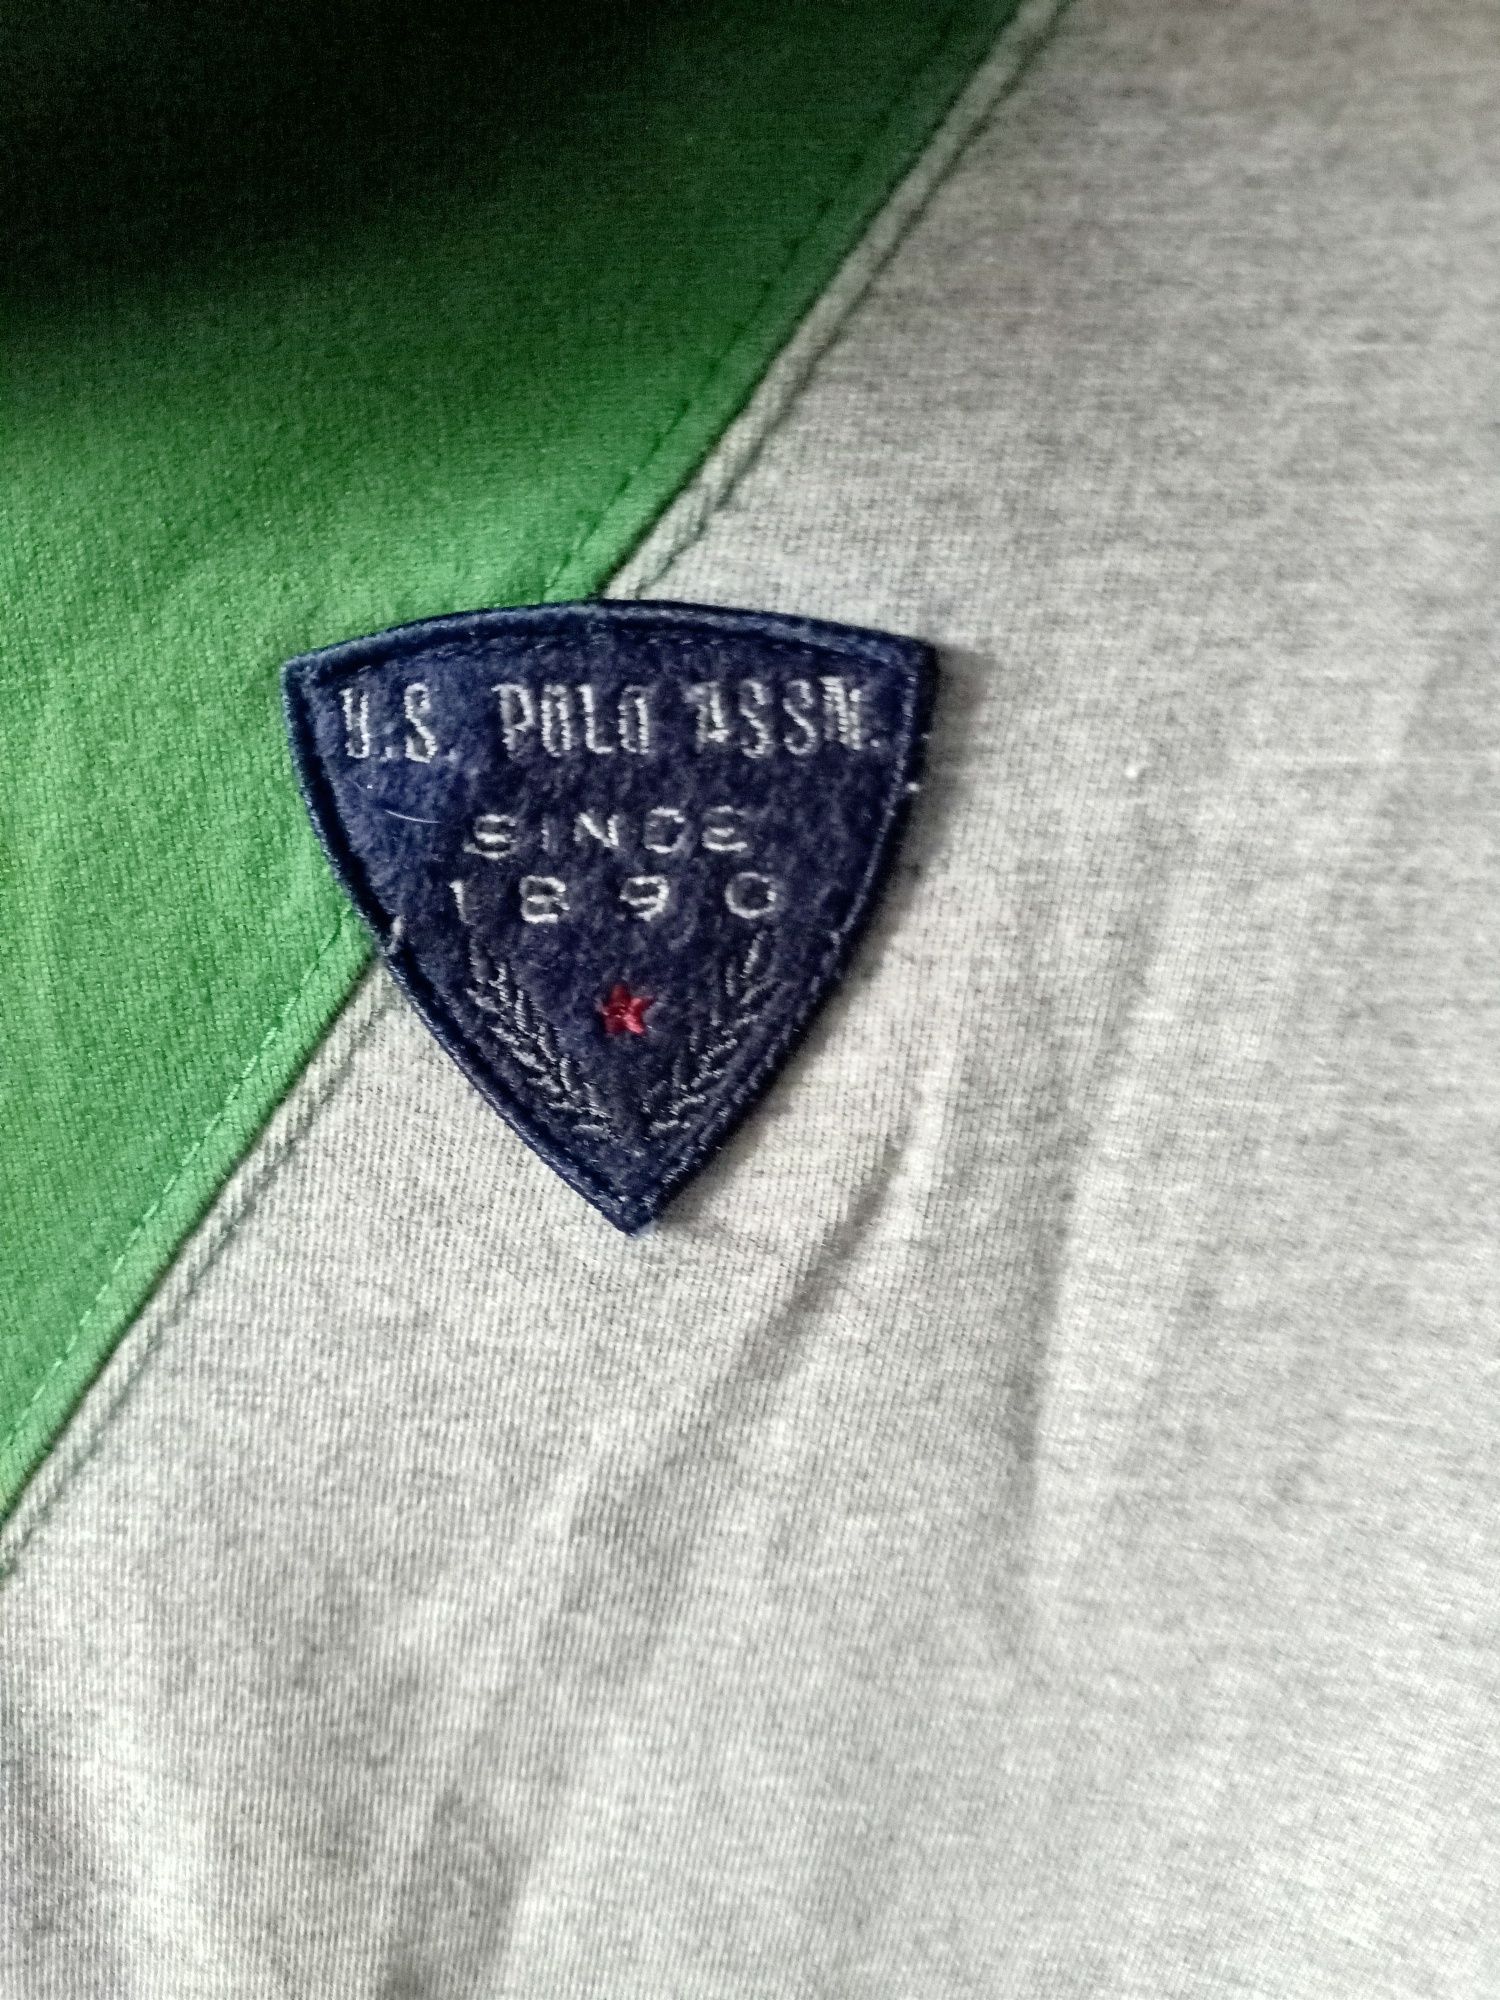 Koszulka Polo U.S. Polo Assnsince 1890 rozmiar S  szara zielona